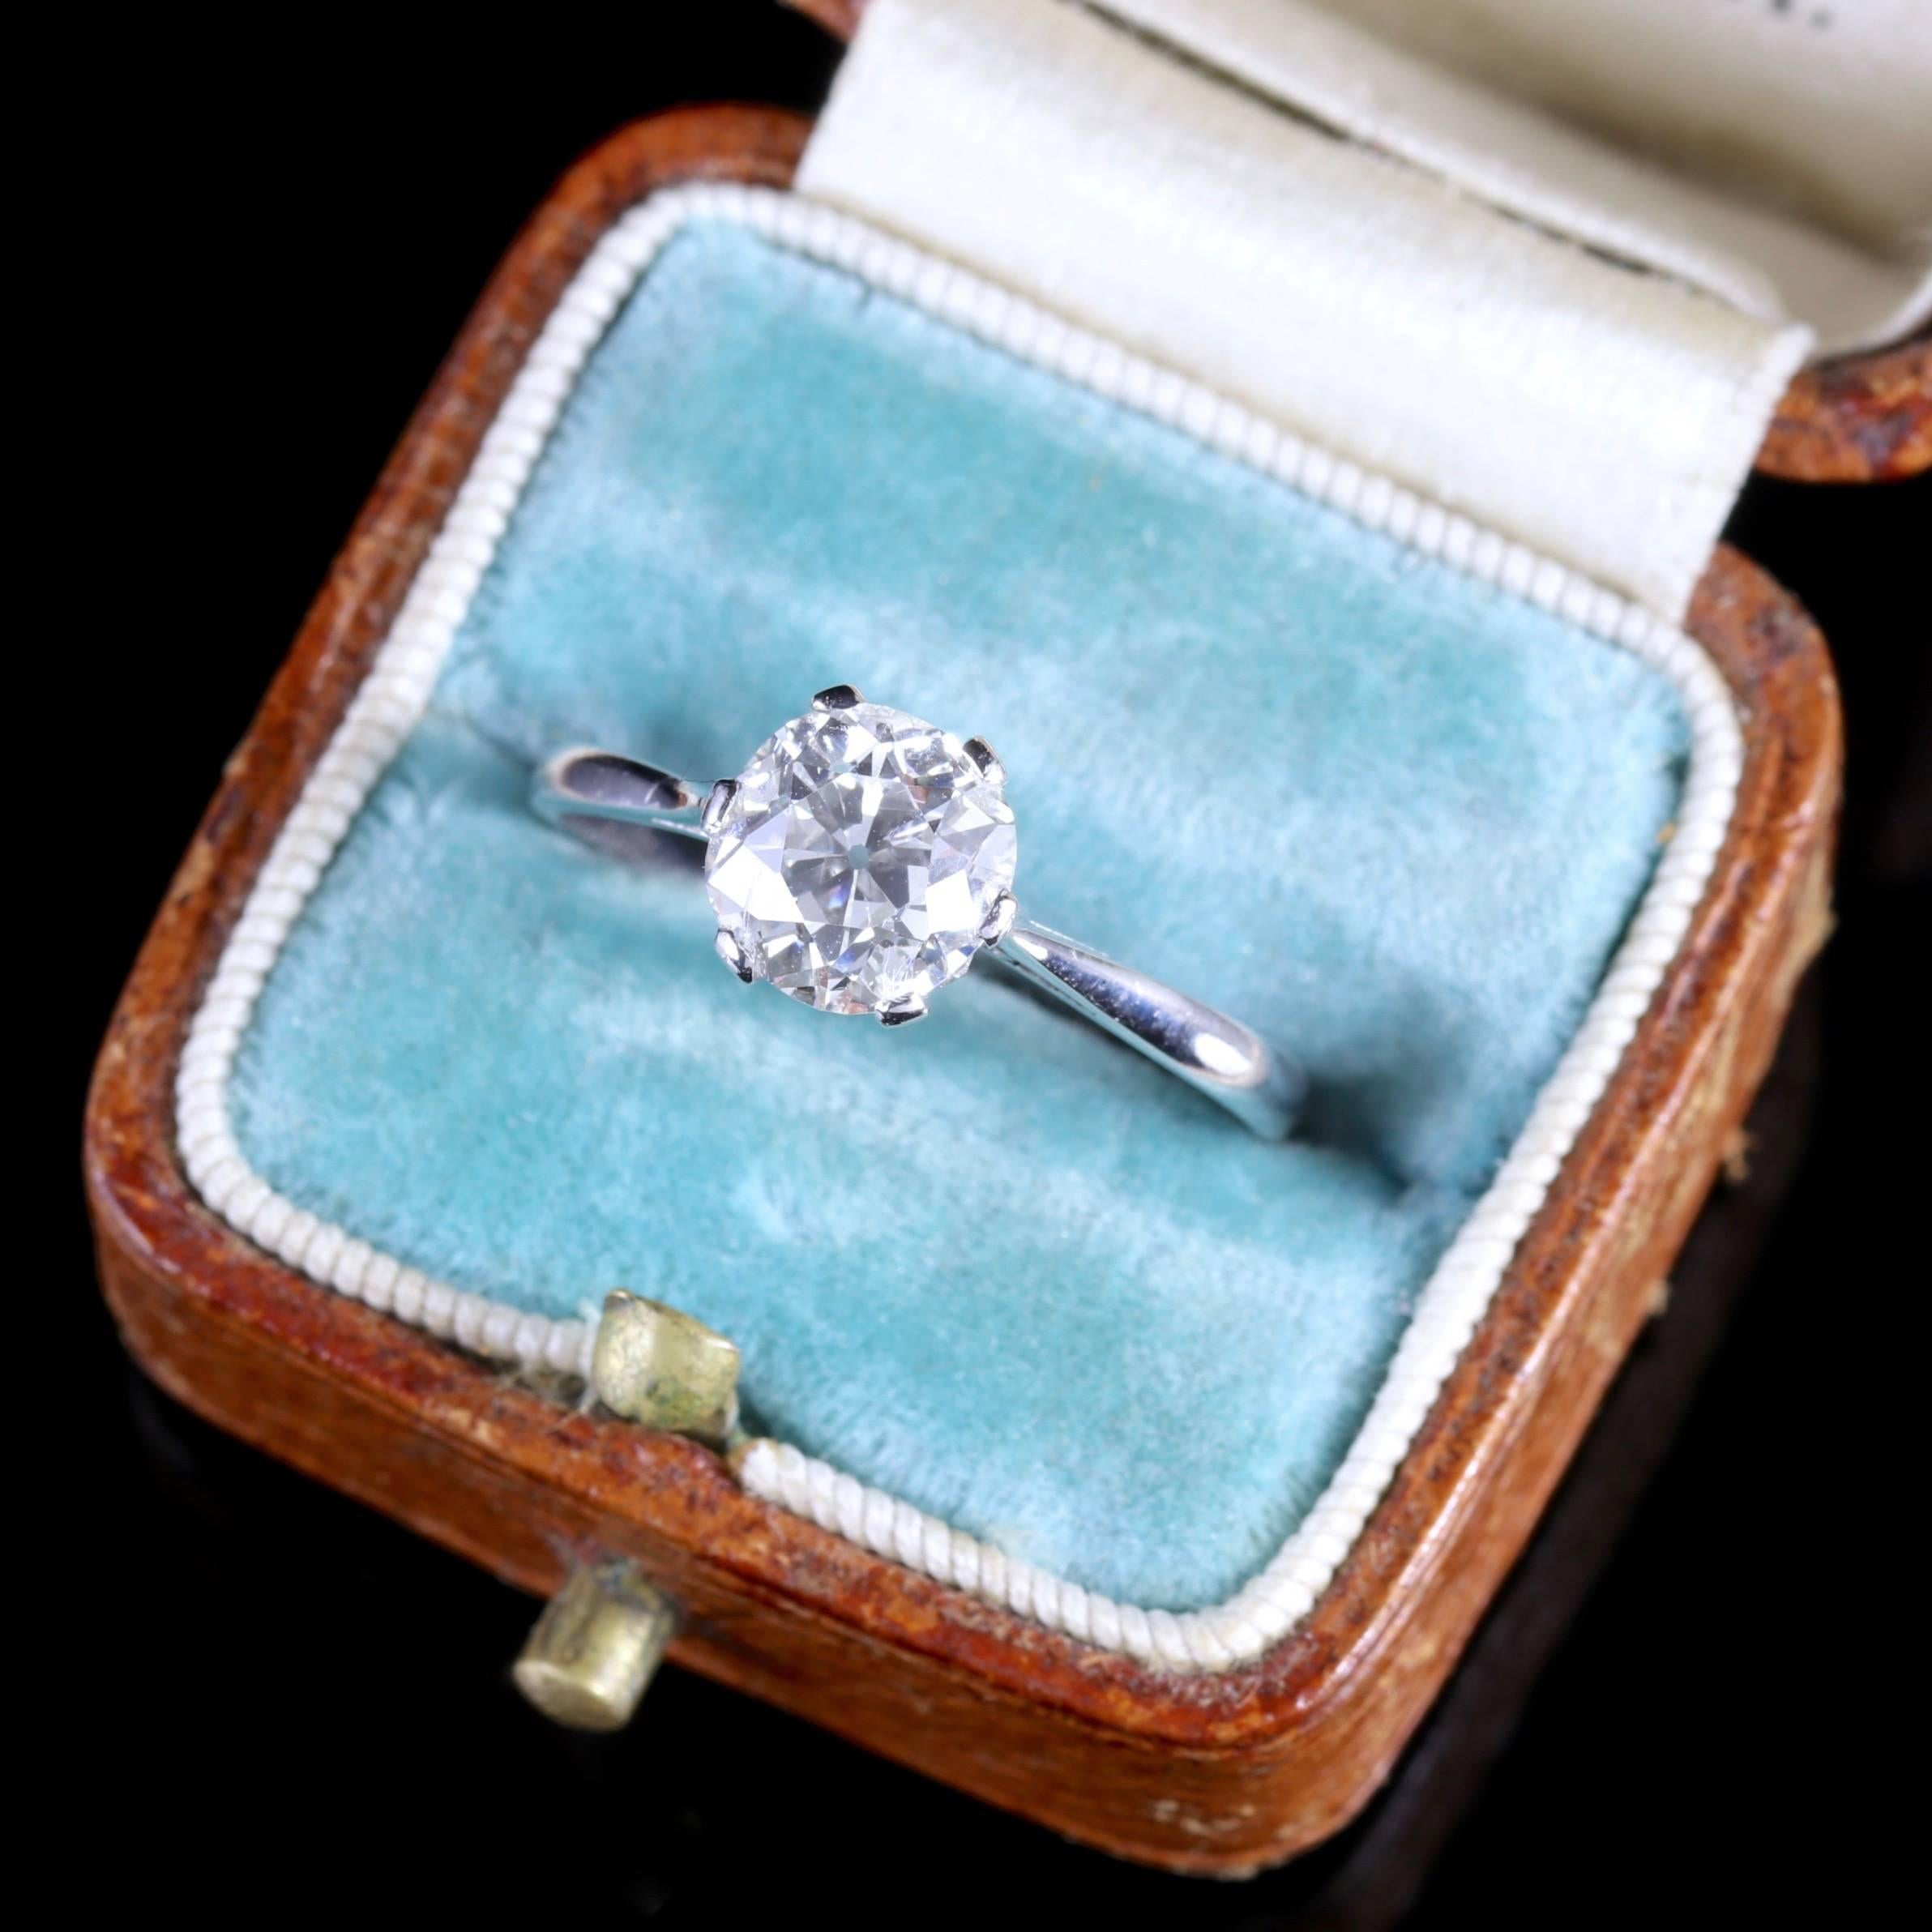 Antique Edwardian 1.45 Carat Diamond Solitaire Engagement Ring, circa 1910 2